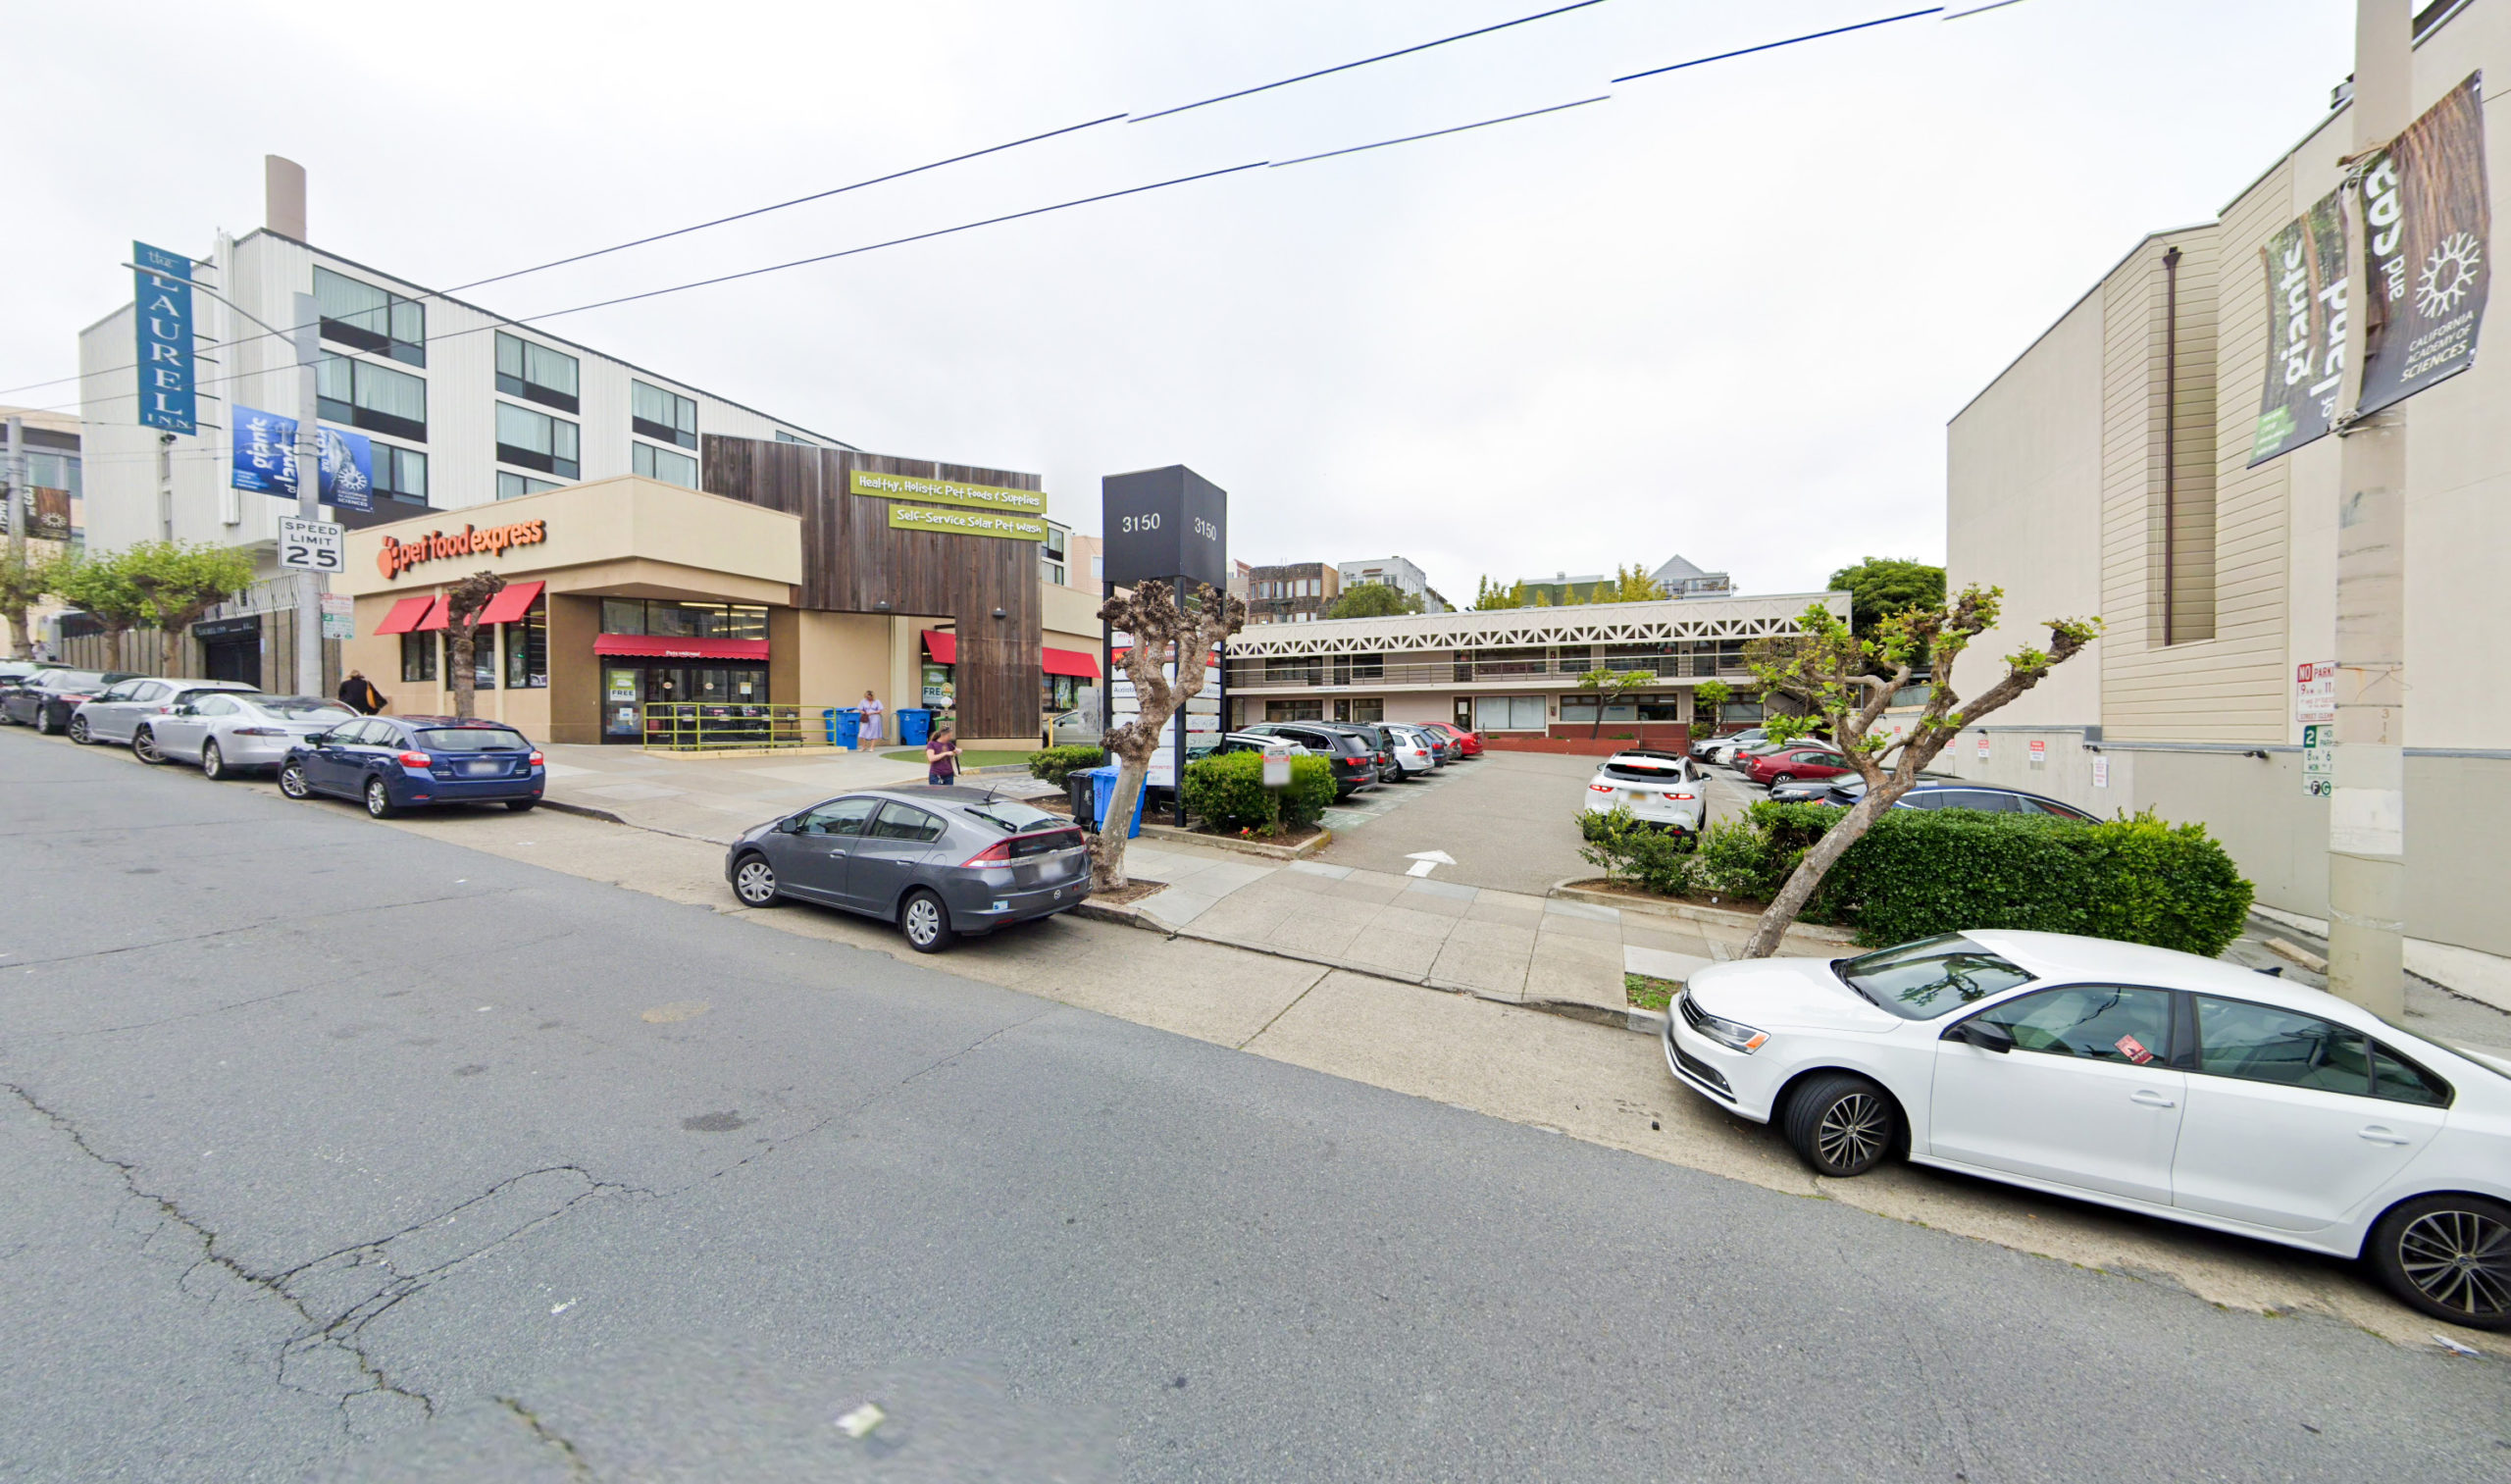 3150 California Street existing condition, image via Google Street View